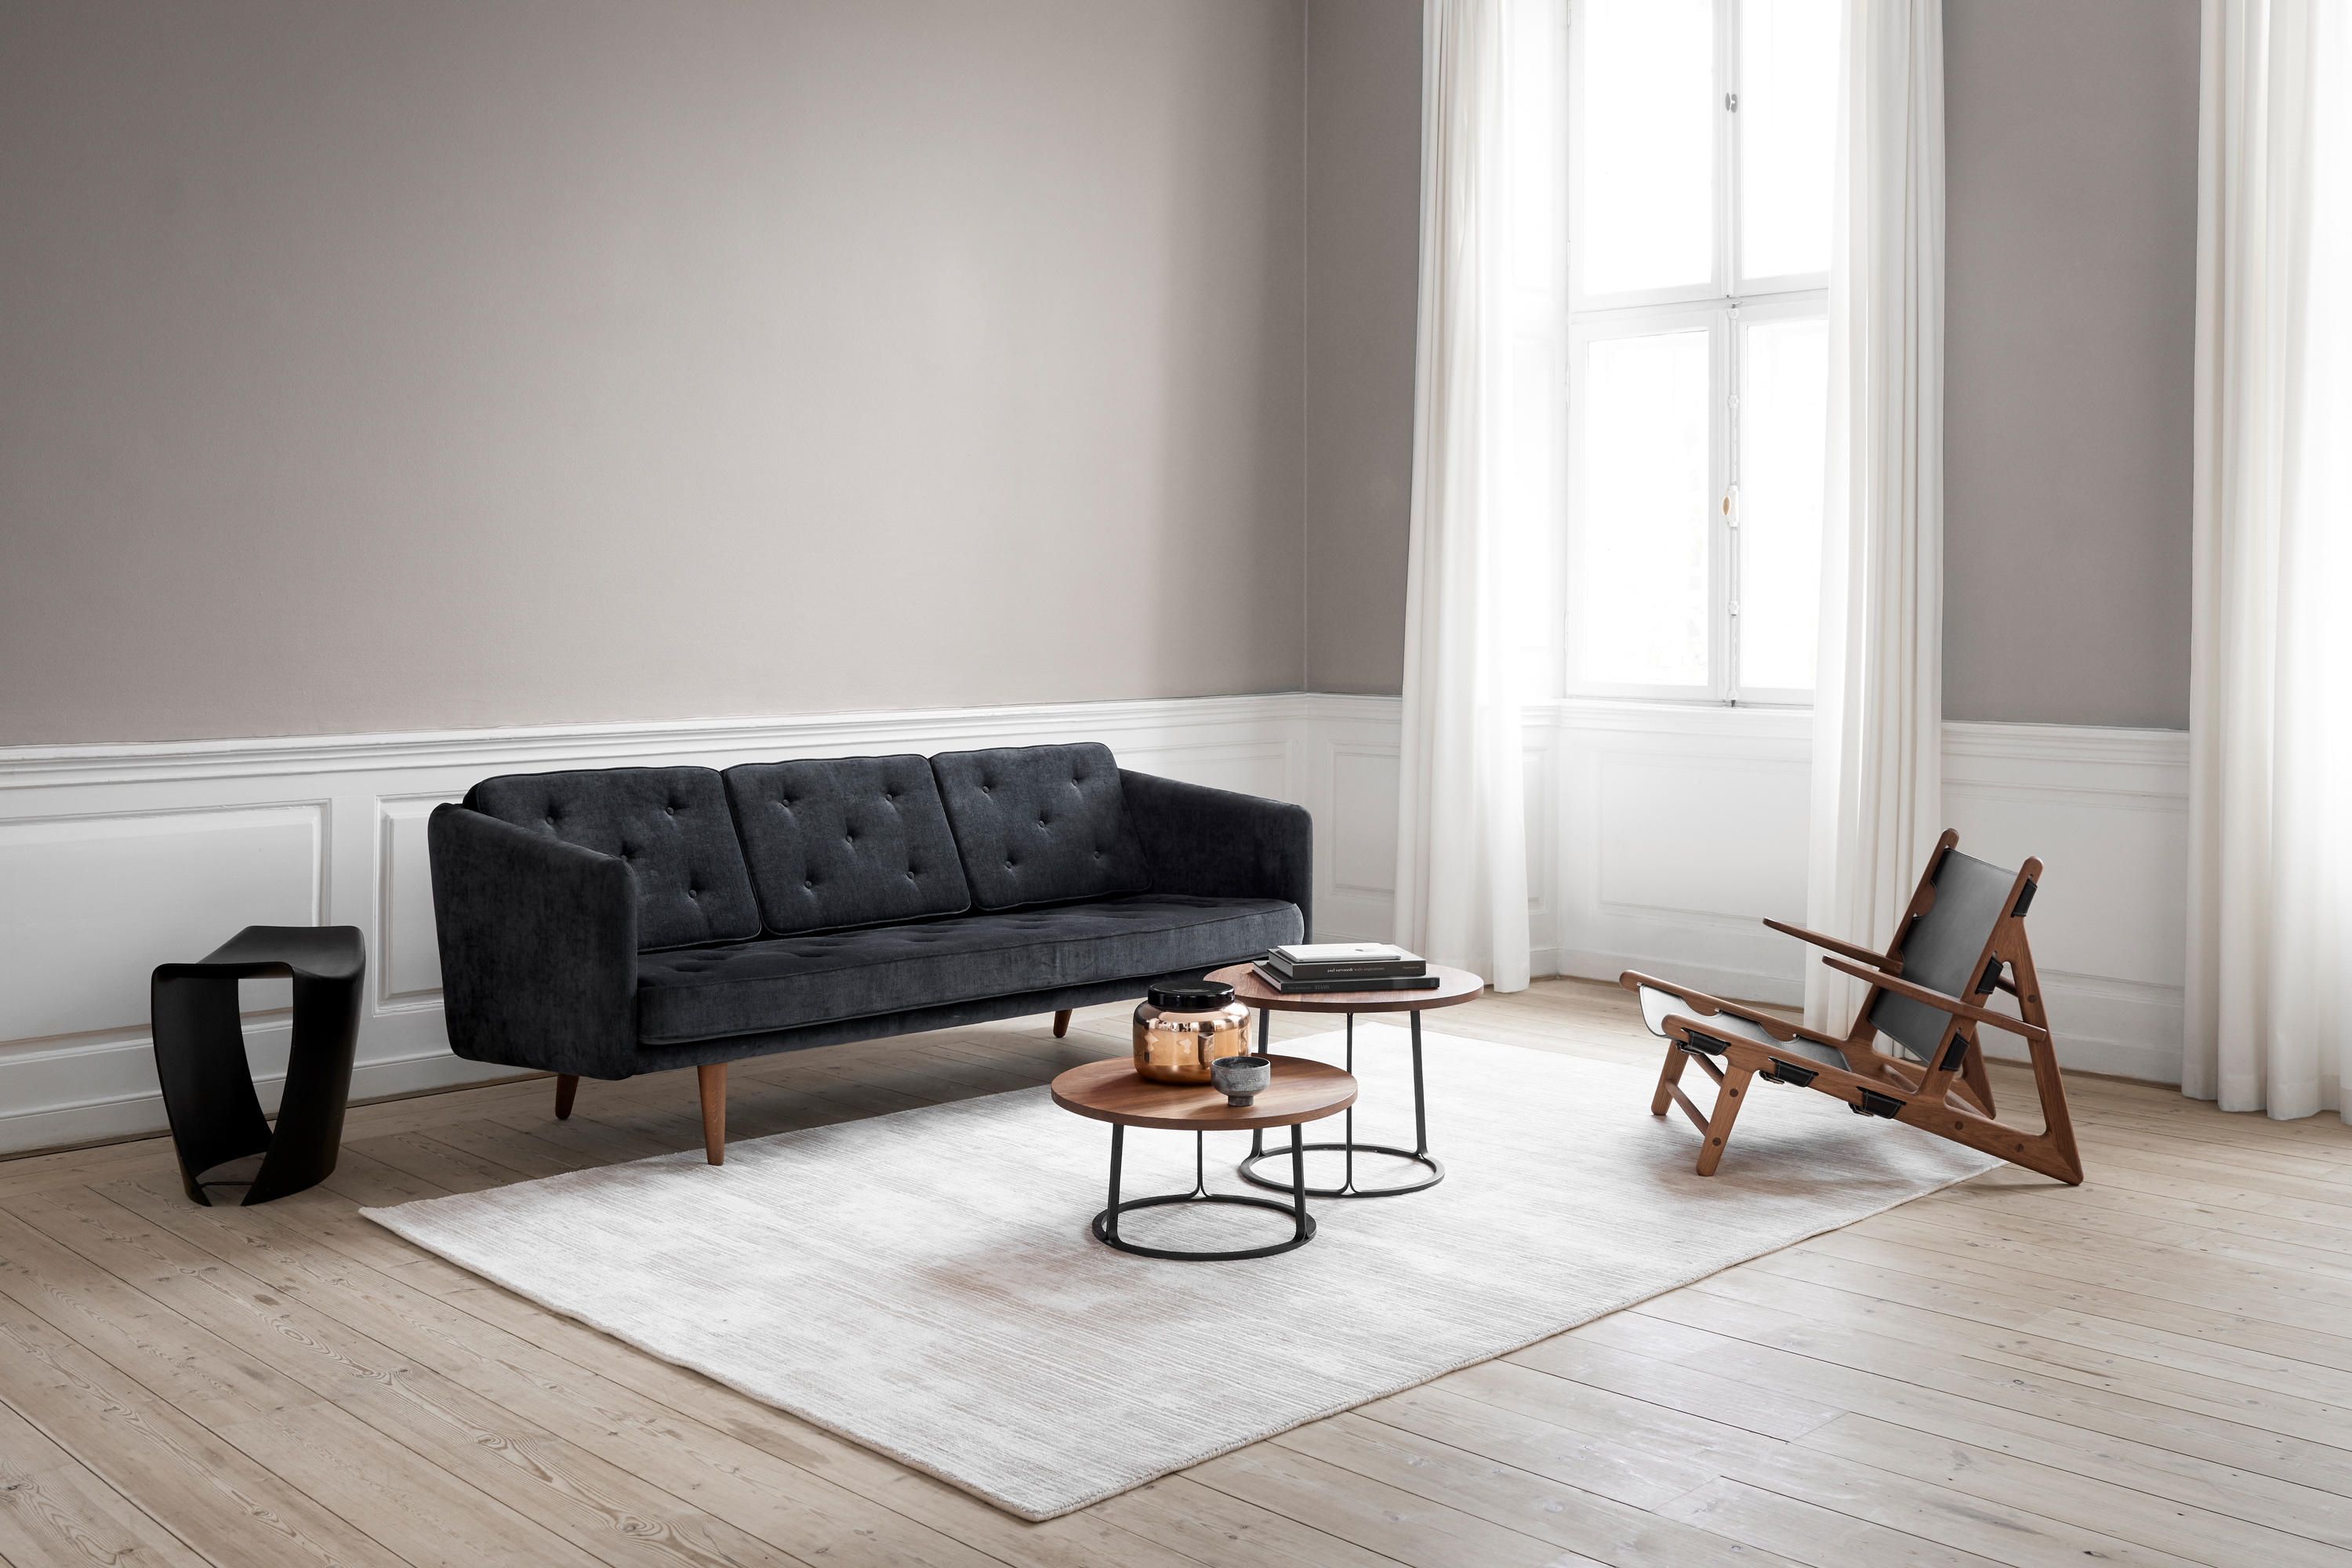 The Spanish Chair & designer furniture | Architonic